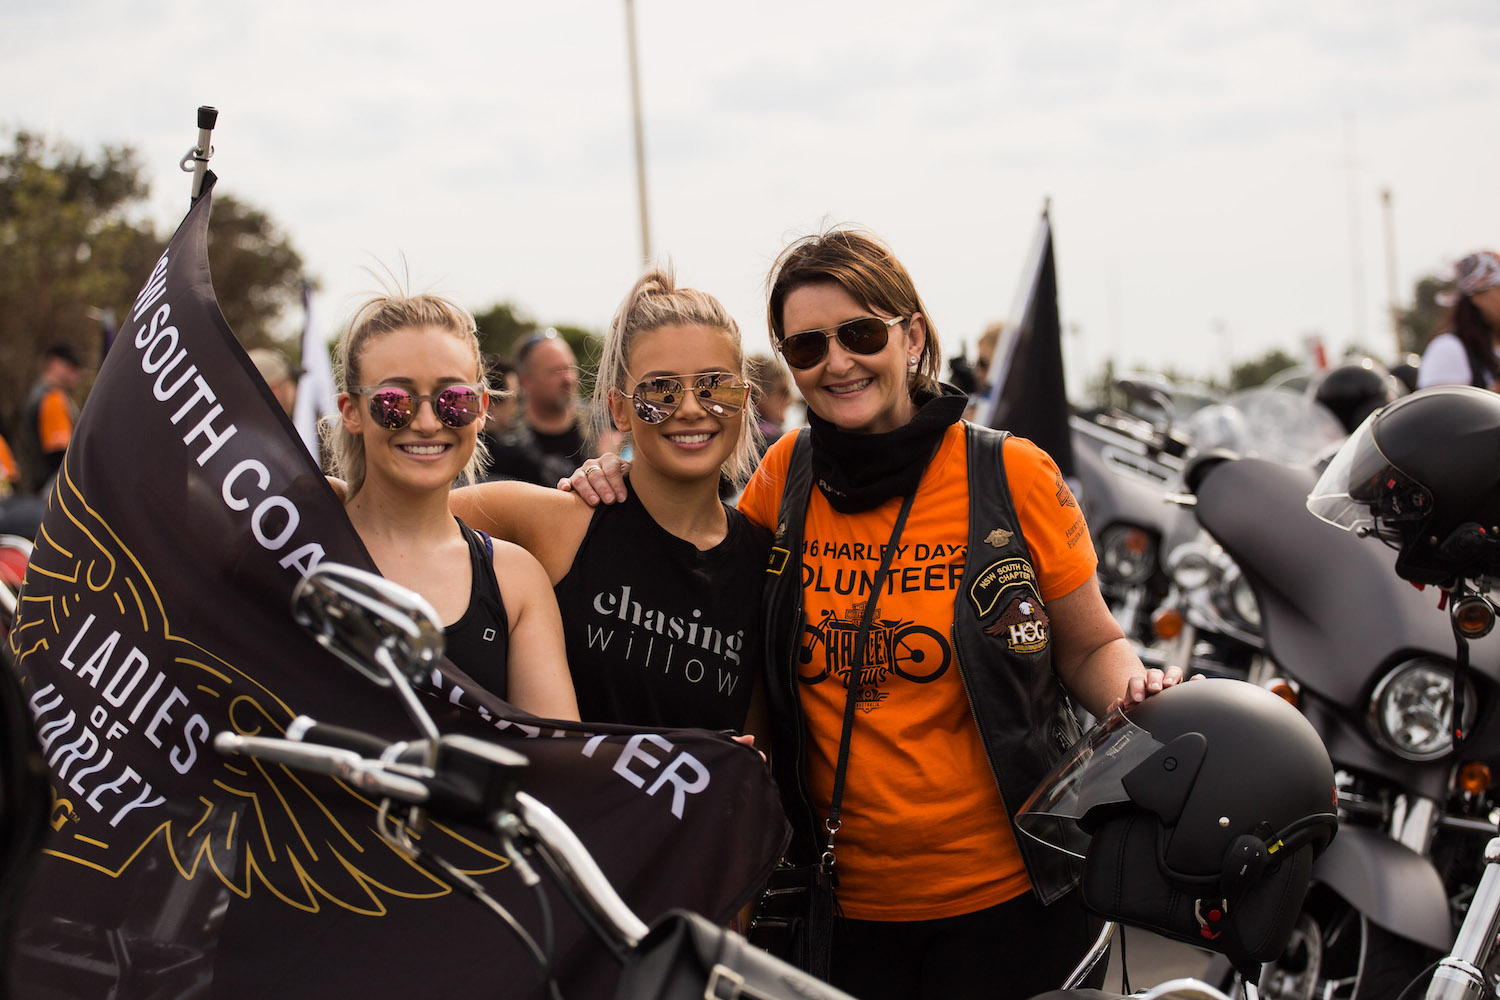 Harley Days 2016 - Wollongong, Australia.